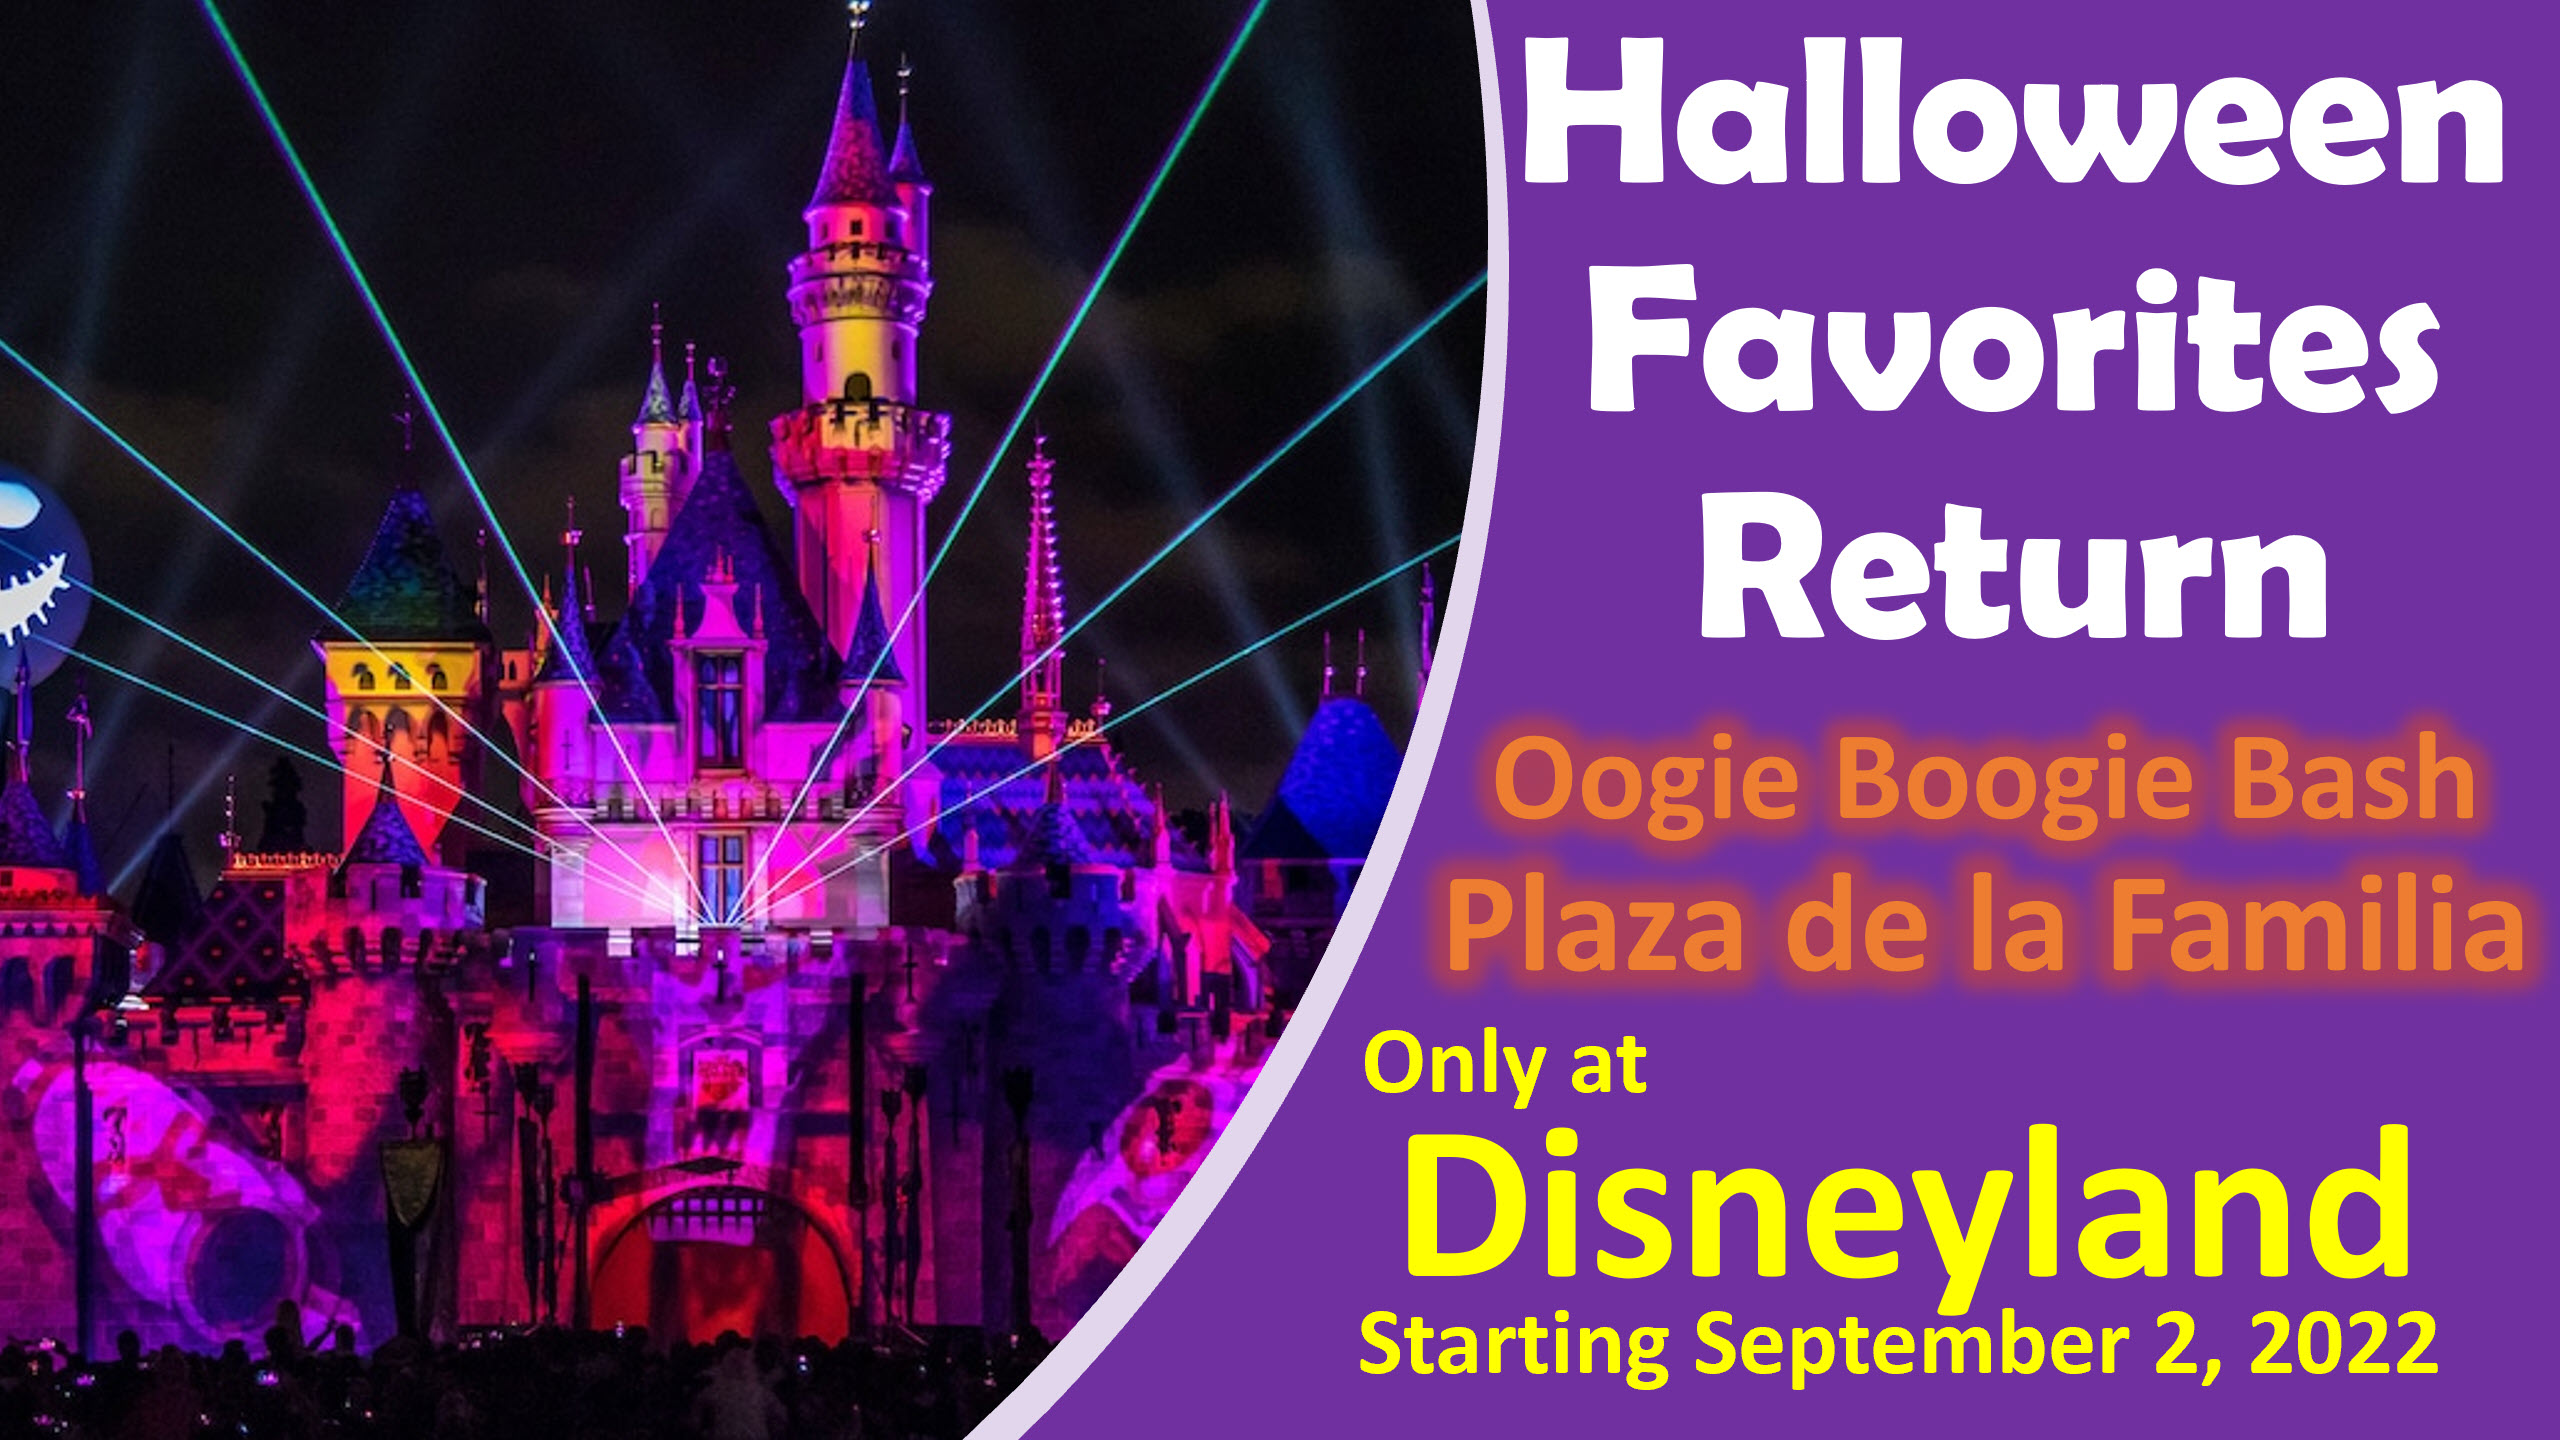 Halloween Time is Back! Oogie Boogie Bash and Plaza de la Familia Return to Disneyland September 2, 2022